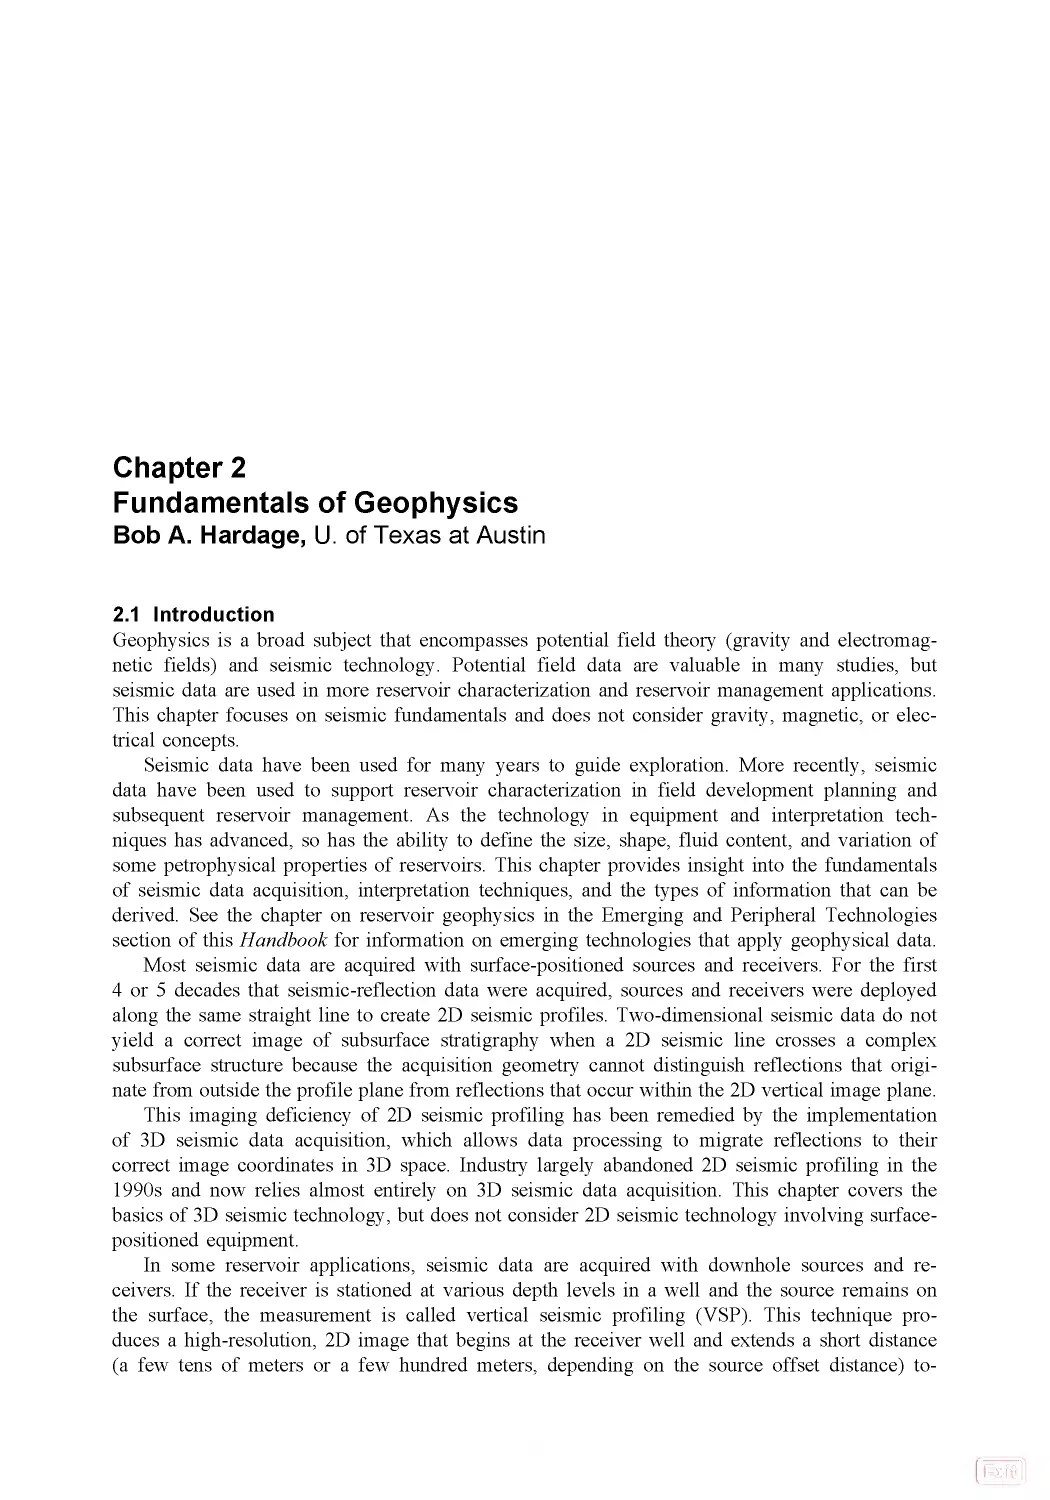 2 - Fundamentals of Geophysics